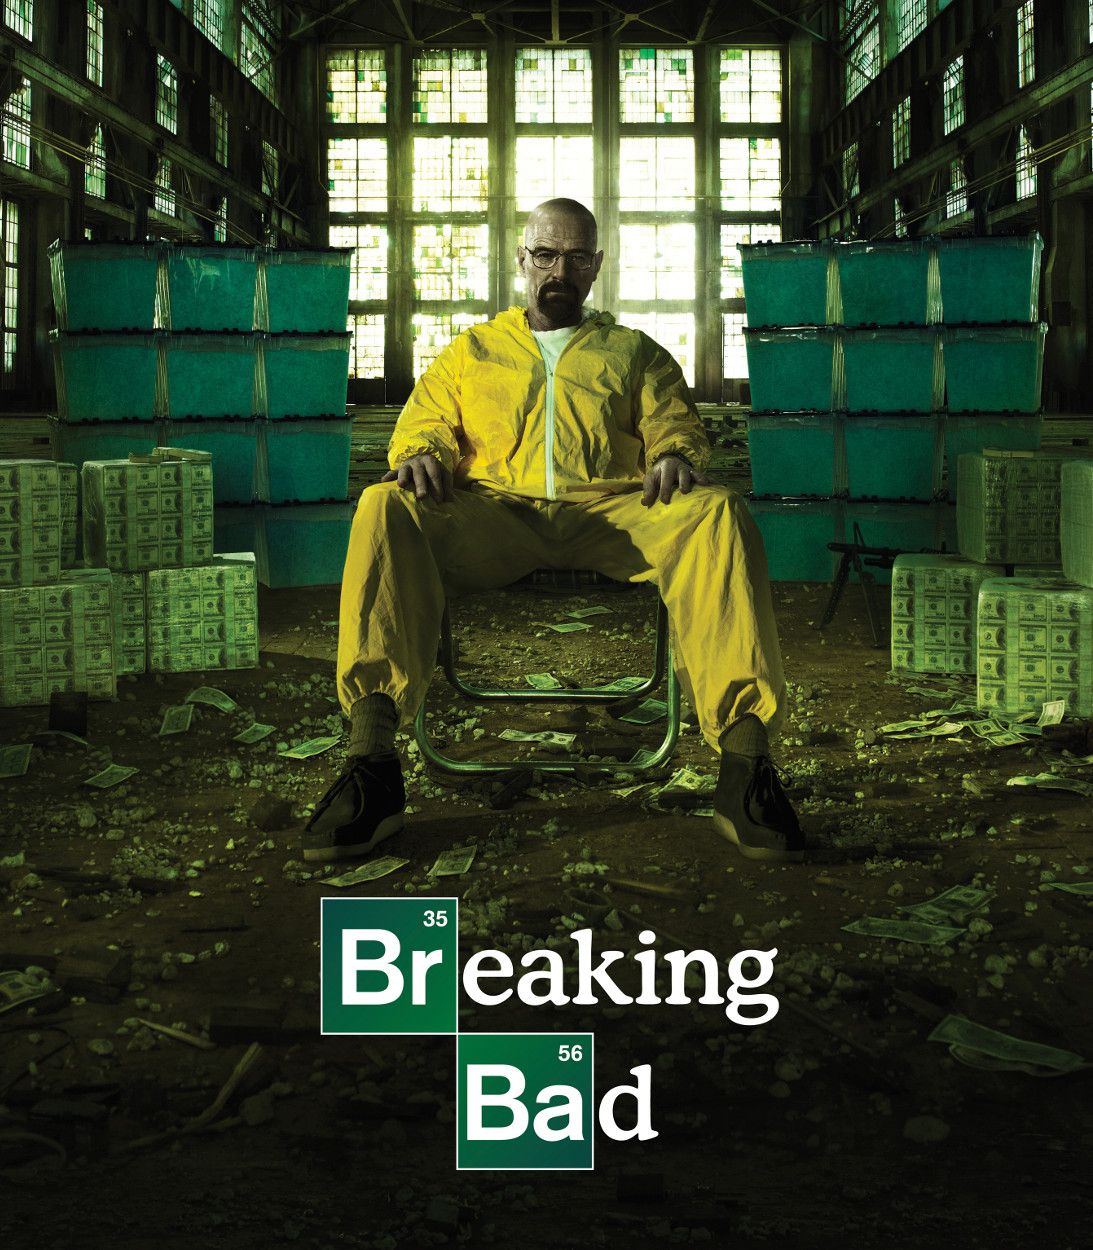 Bryan Cranston as Walter White in Breaking Bad Poster